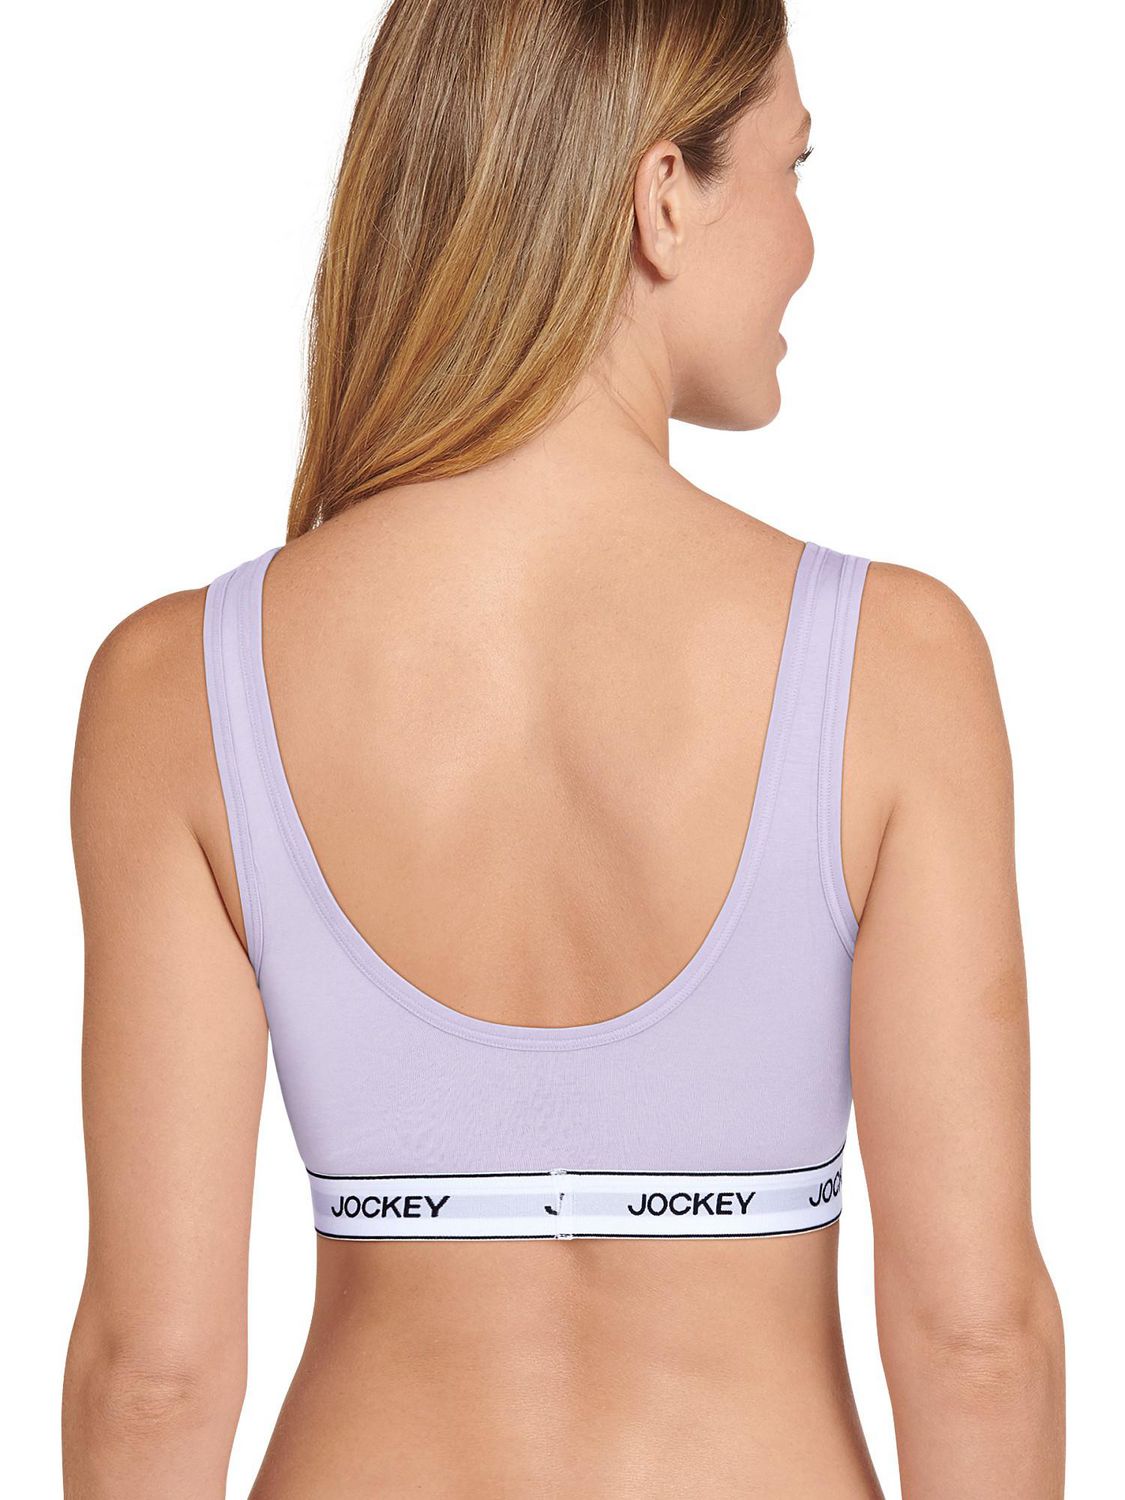 Jockey sports bra (small), Women's Fashion, Activewear on Carousell